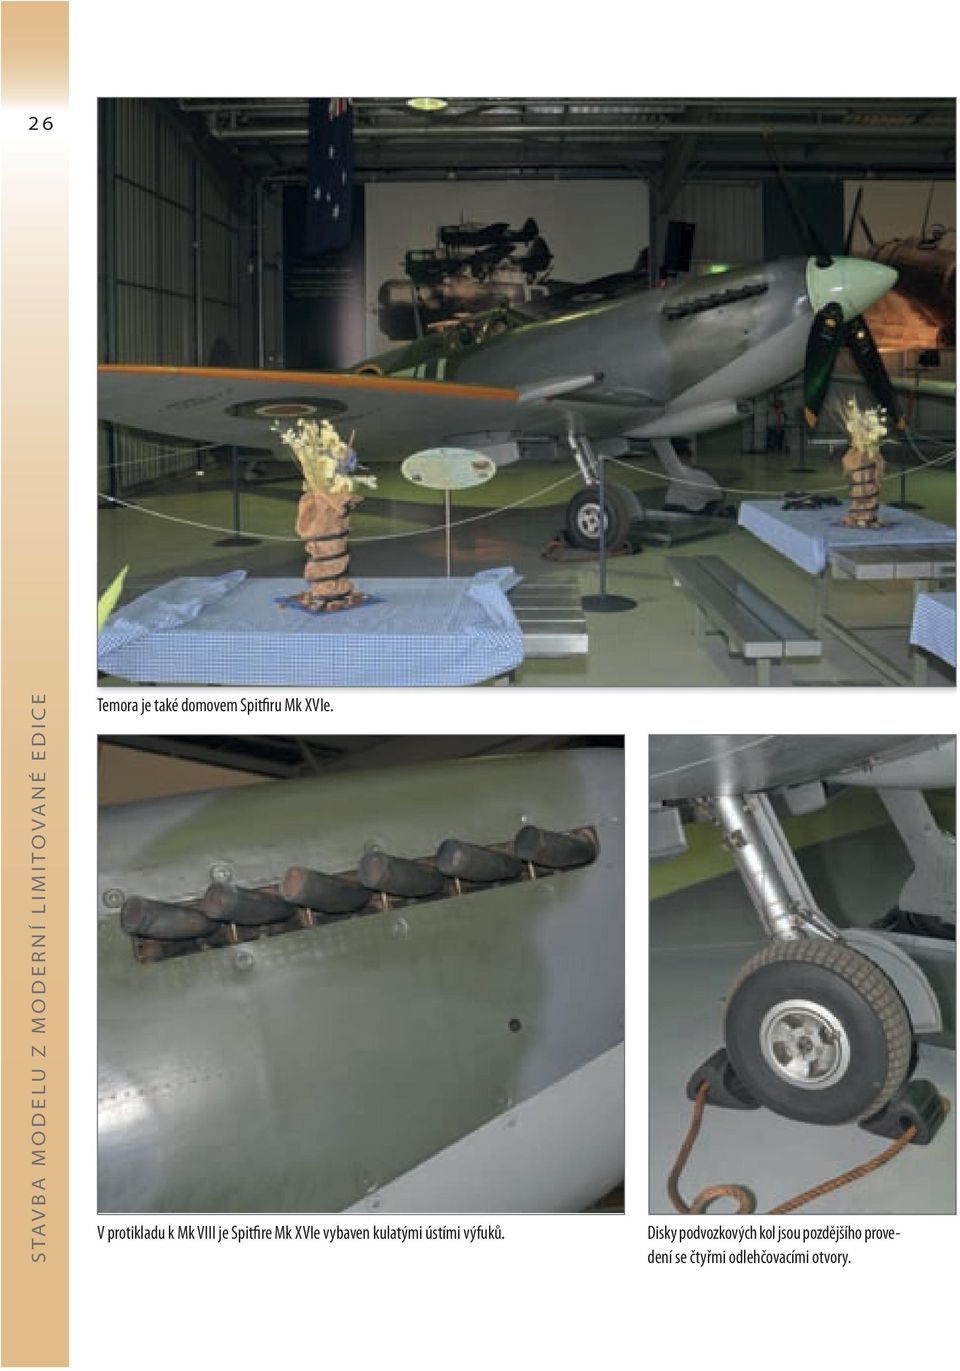 V protikladu k Mk VIII je Spitfire Mk XVIe vybaven kulatými